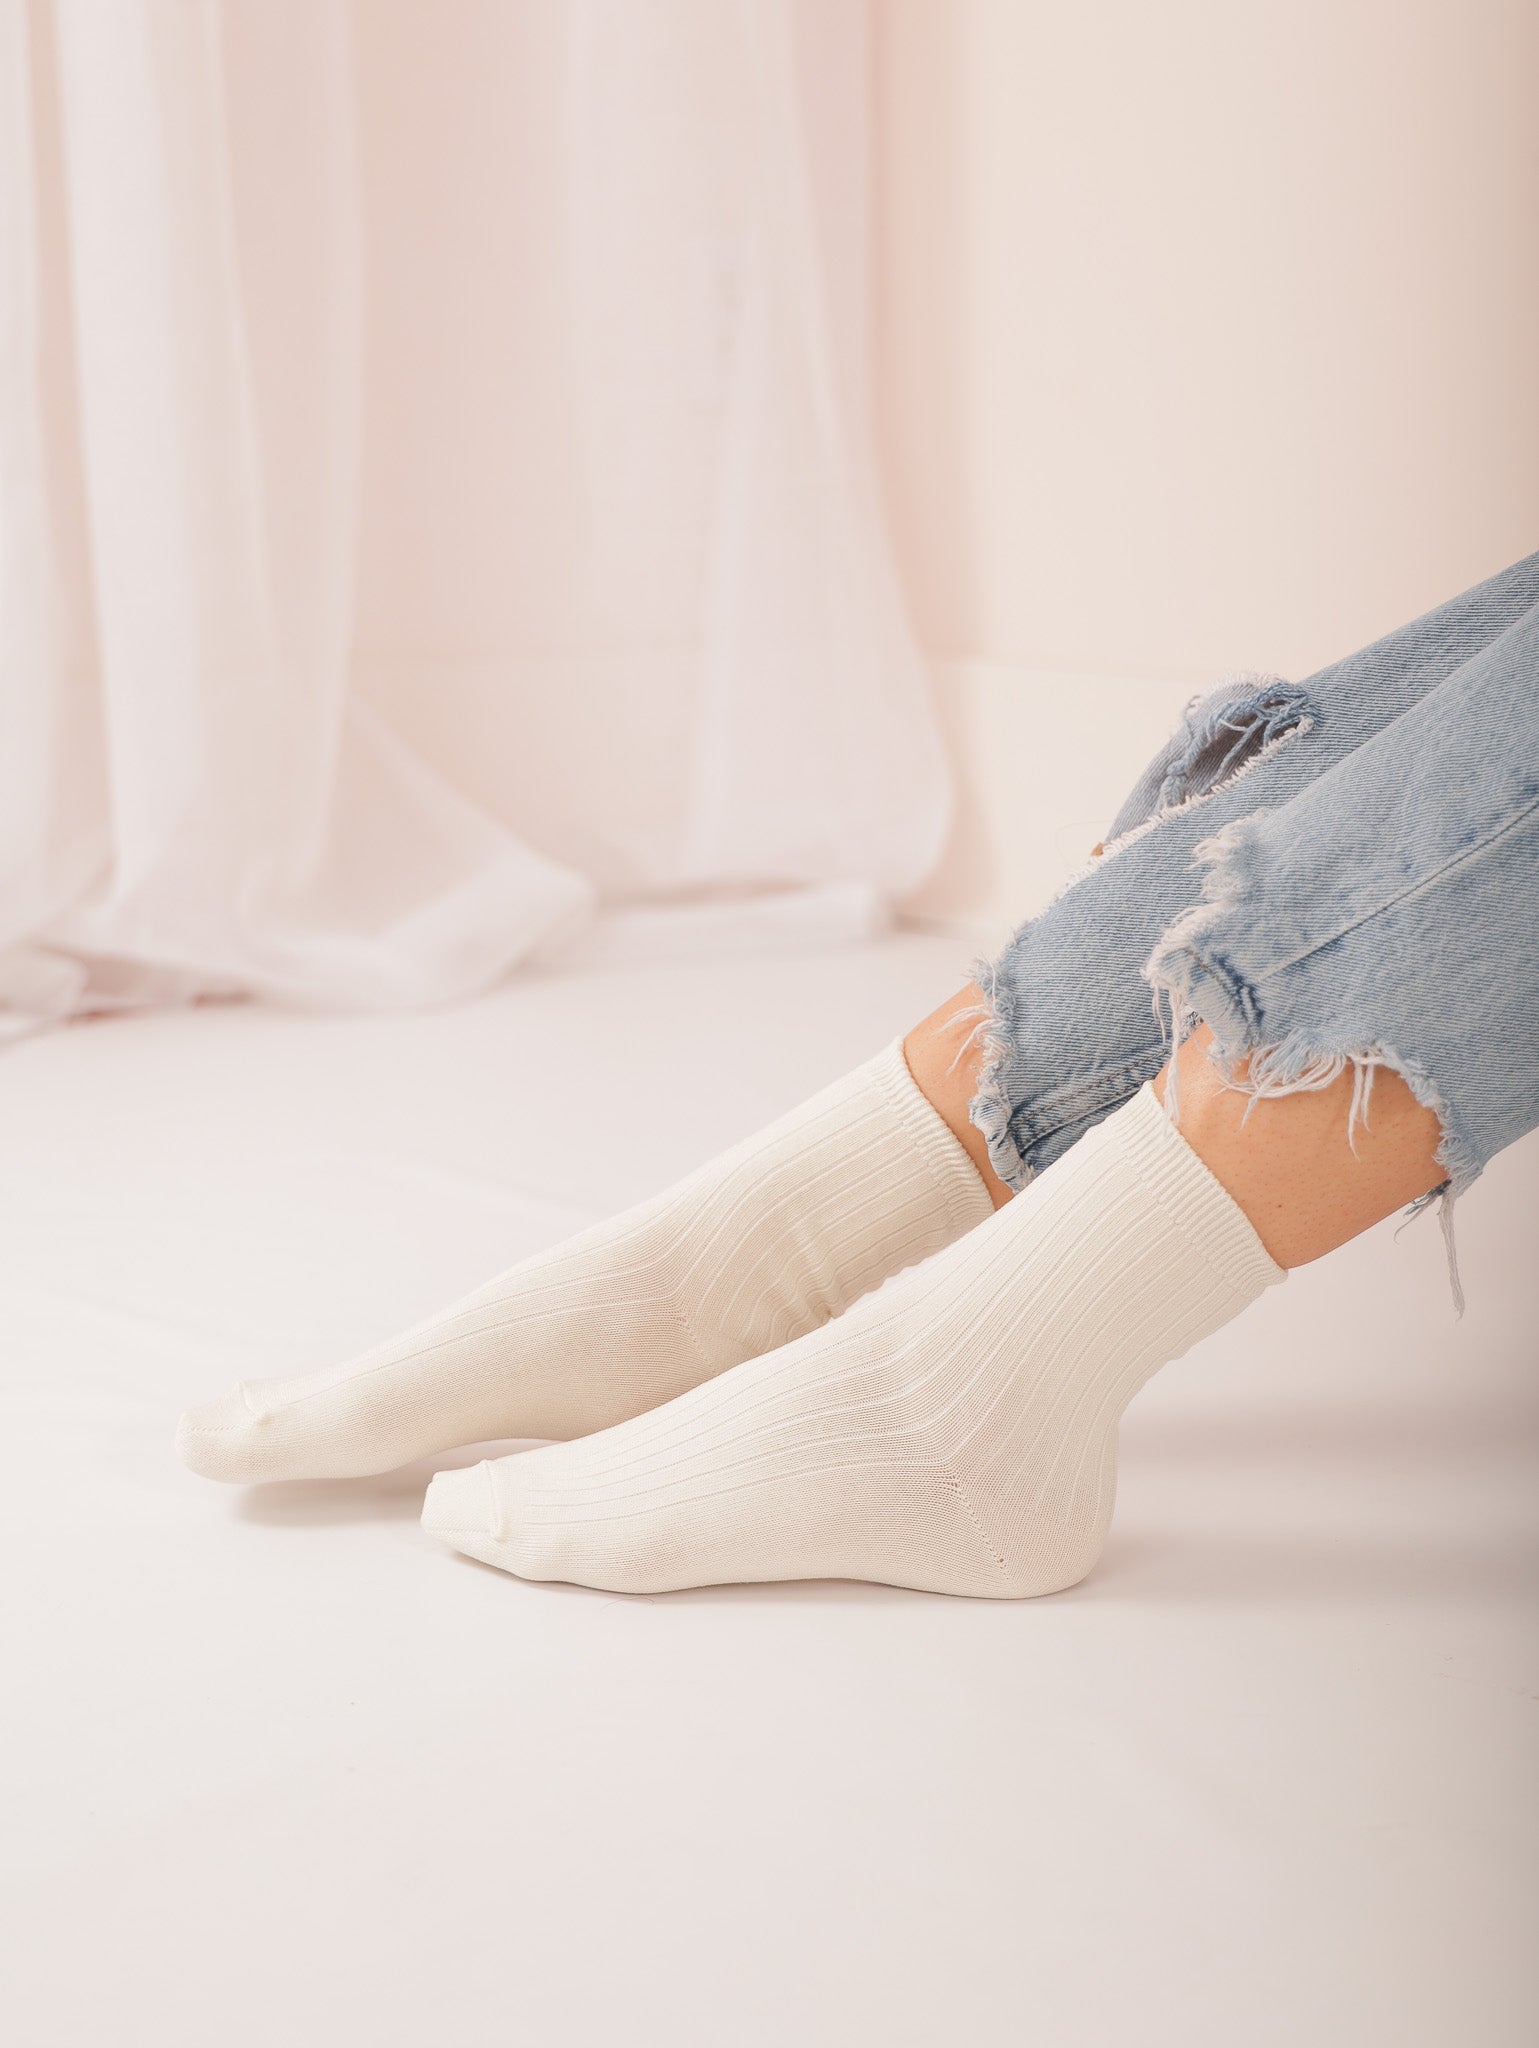 Molly Green - Snuggle Socks - Accessories